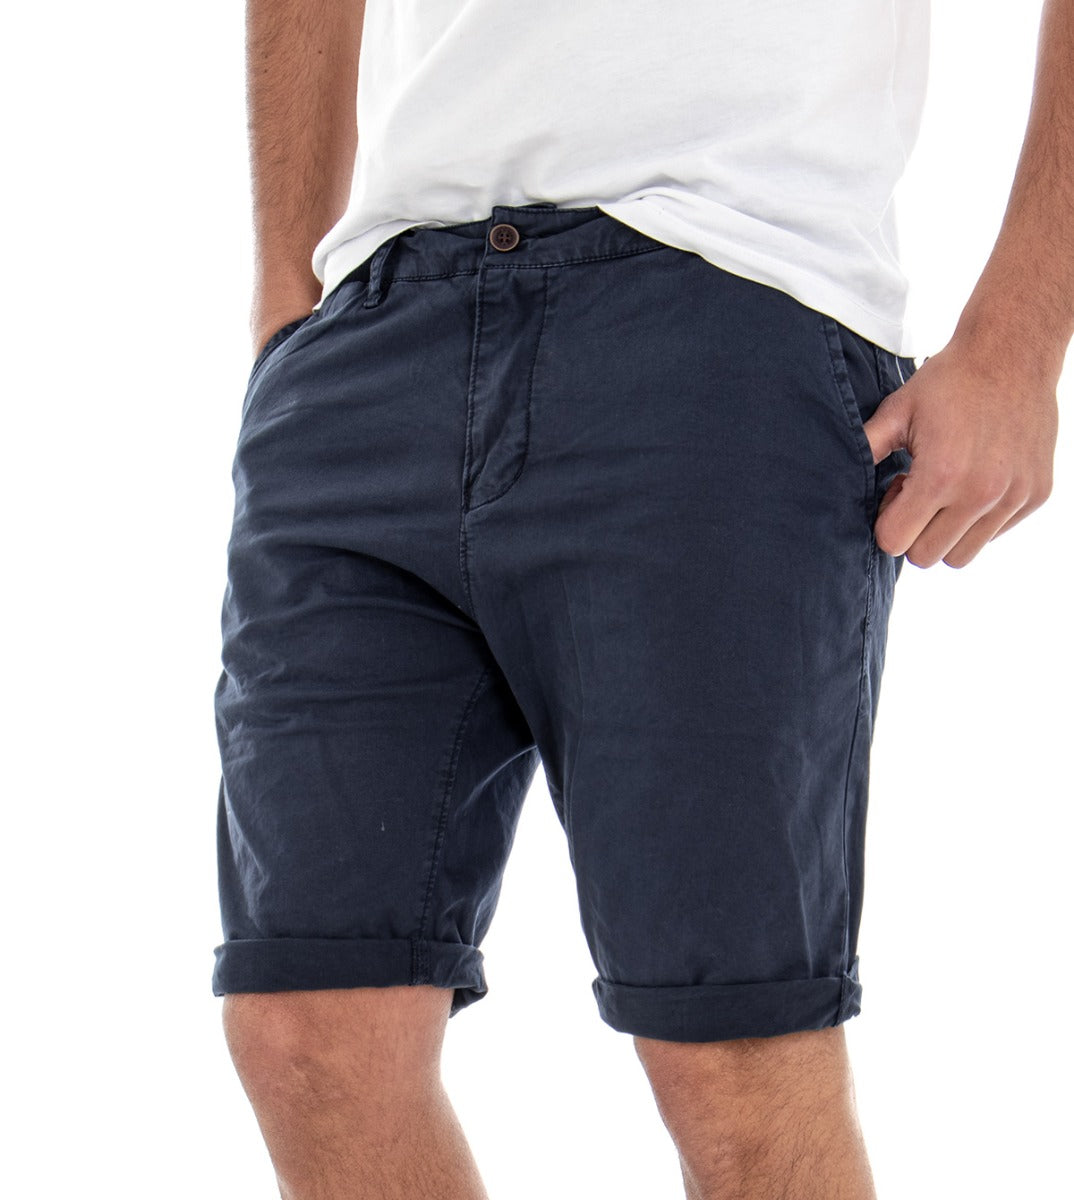 Bermuda Short Men's Shorts America Pocket Solid Color Slim Blue GIOSAL-PC1300A